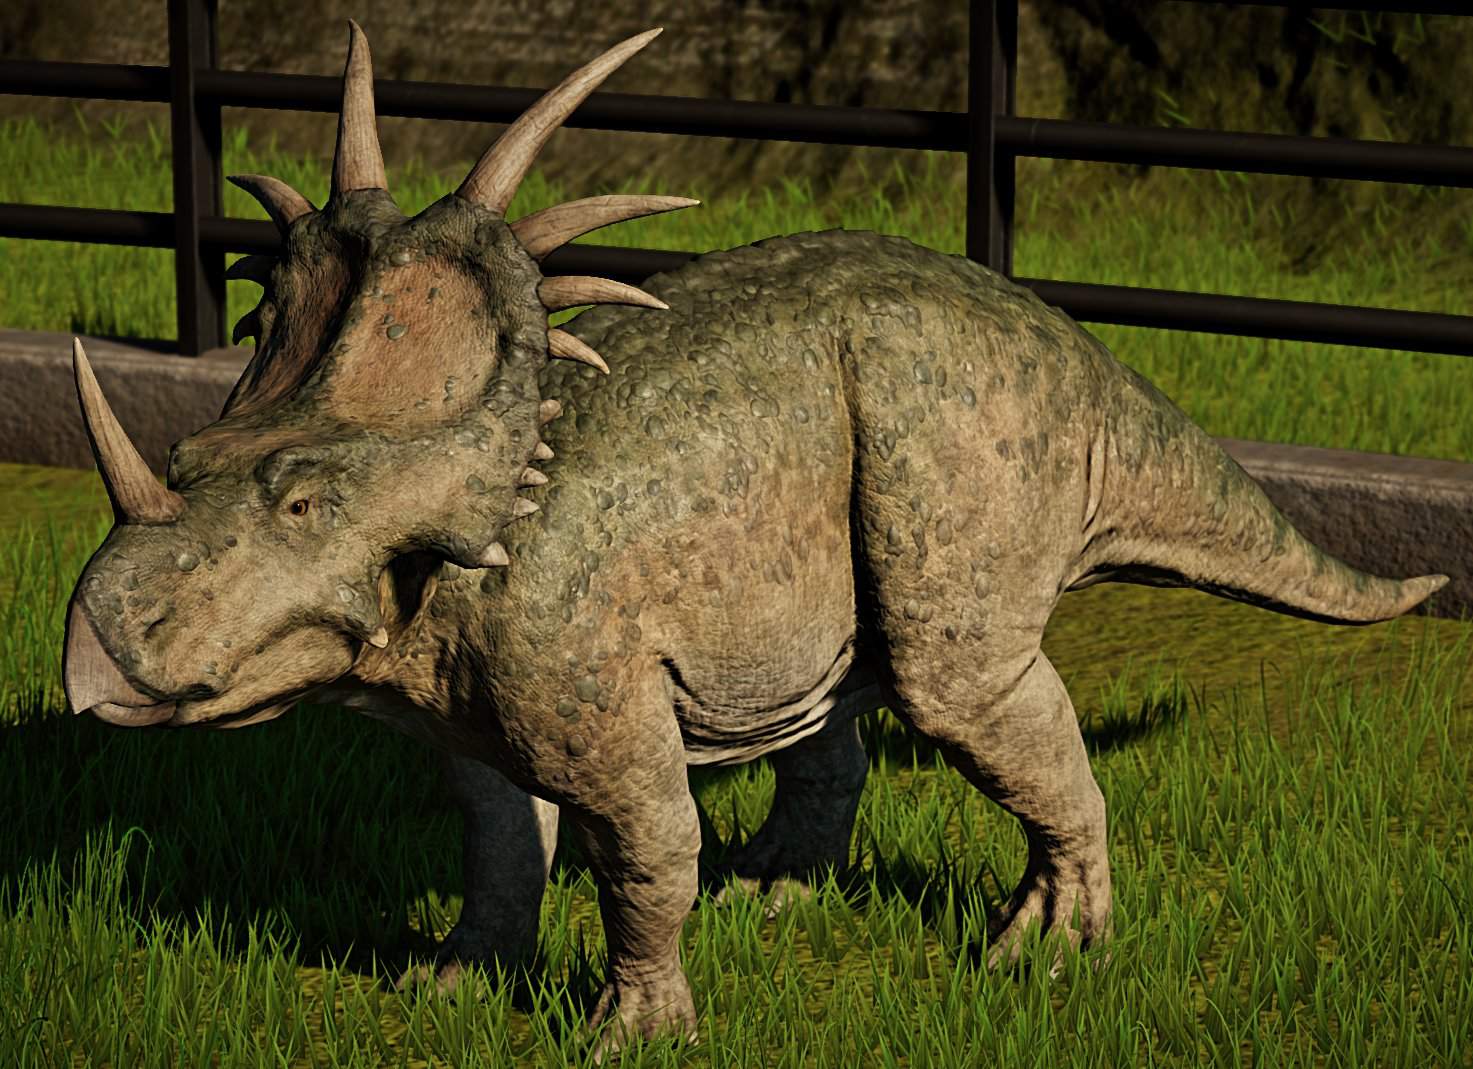 jurassic world evolution styracosaurus